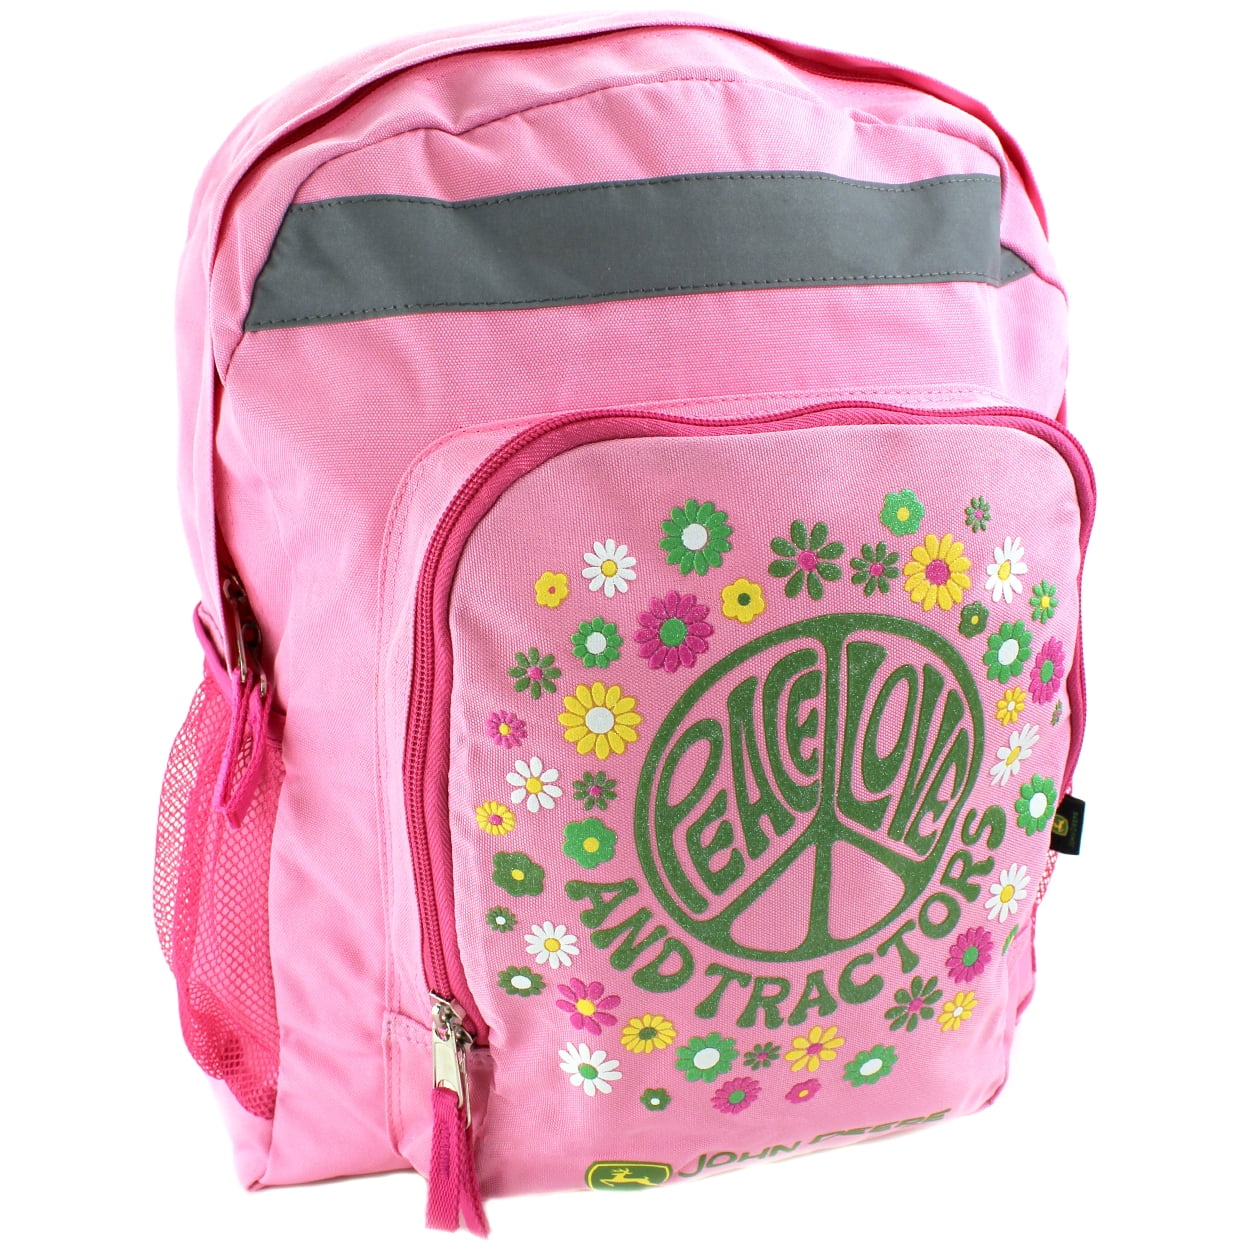 John Deere Pink Camo Sleeping Bag for Girls 